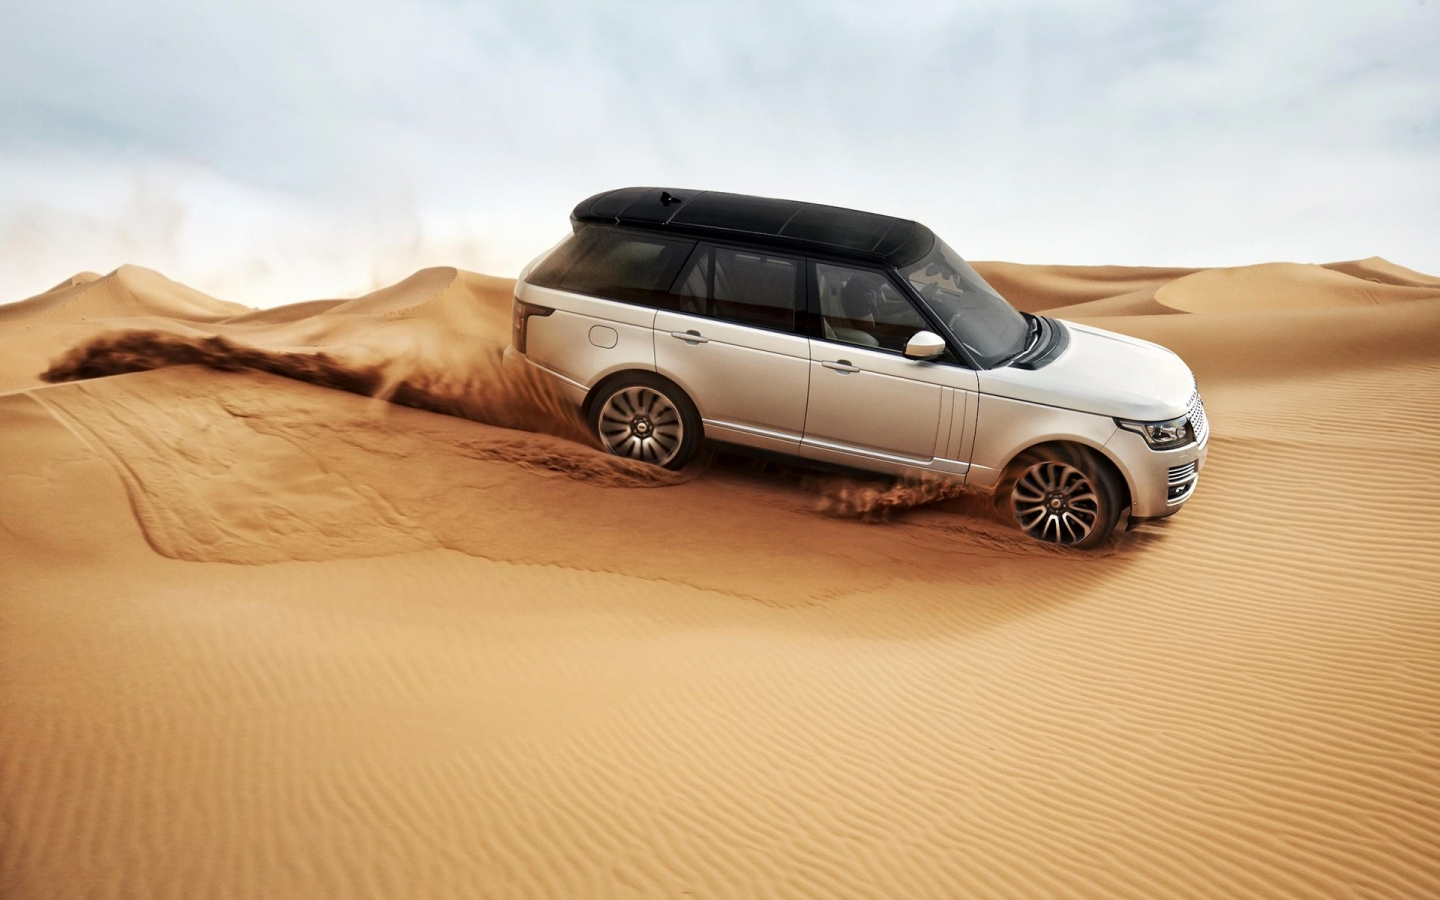 Range Rover in the Desert for 1440 x 900 widescreen resolution